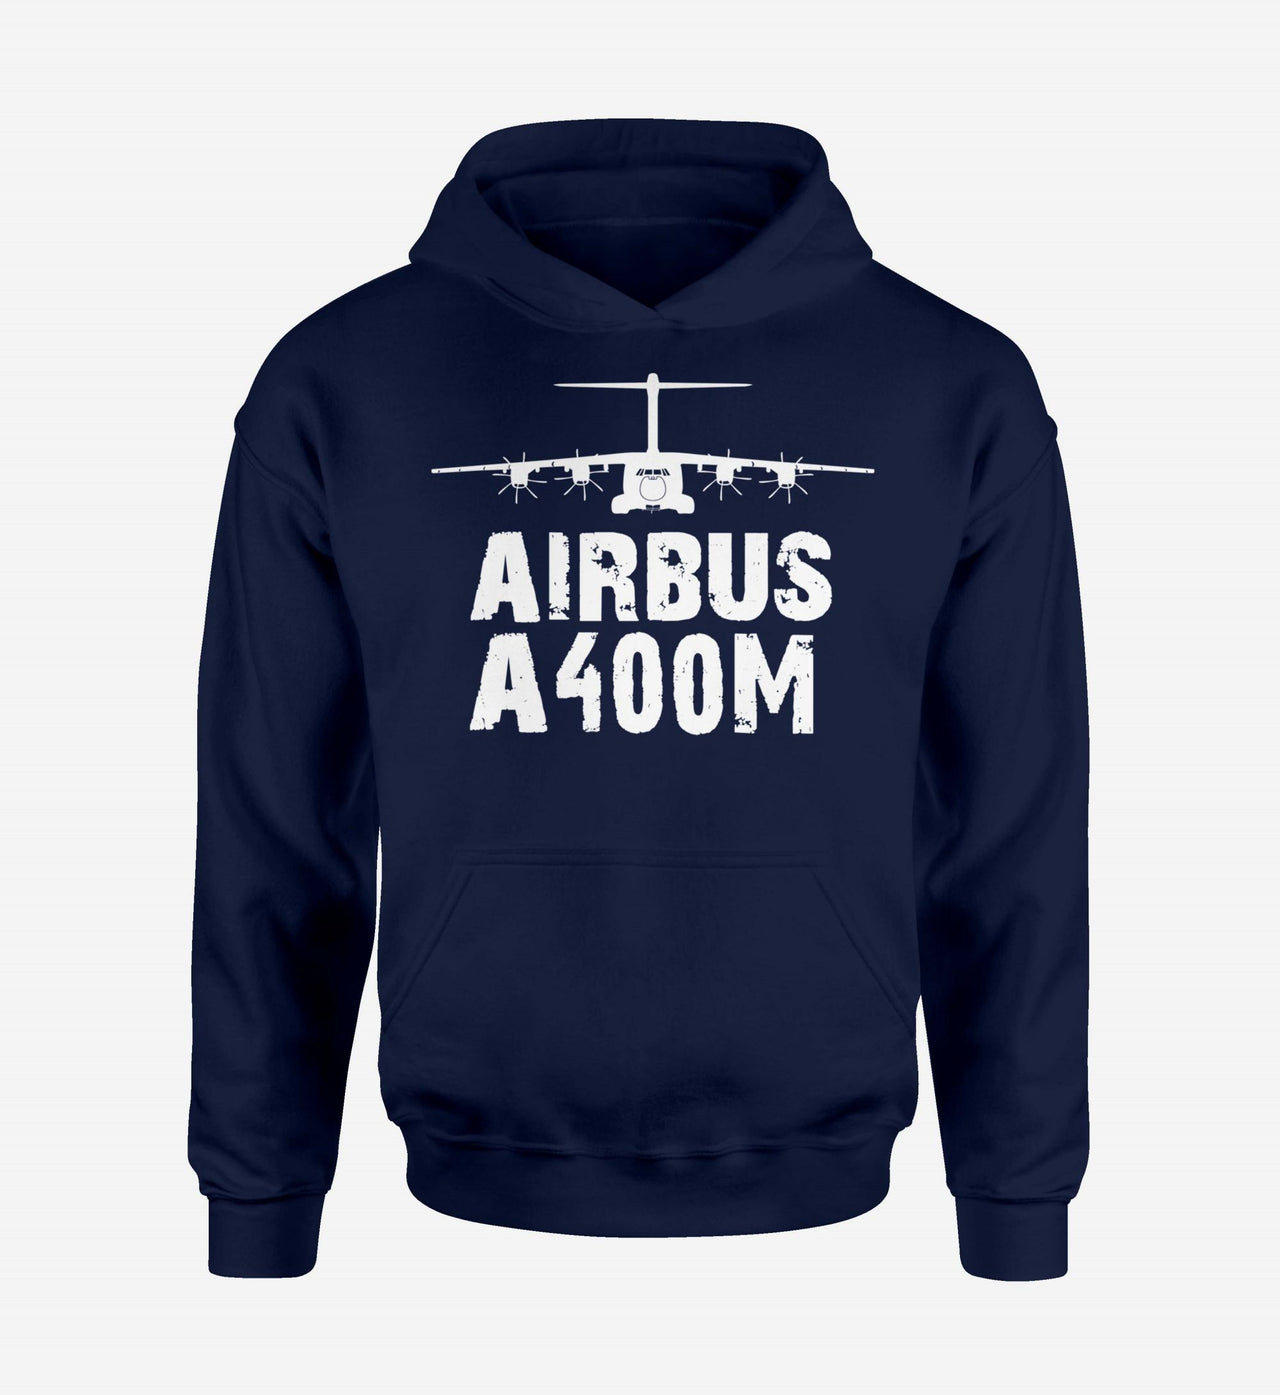 Airbus A400M & Plane Designed Hoodies